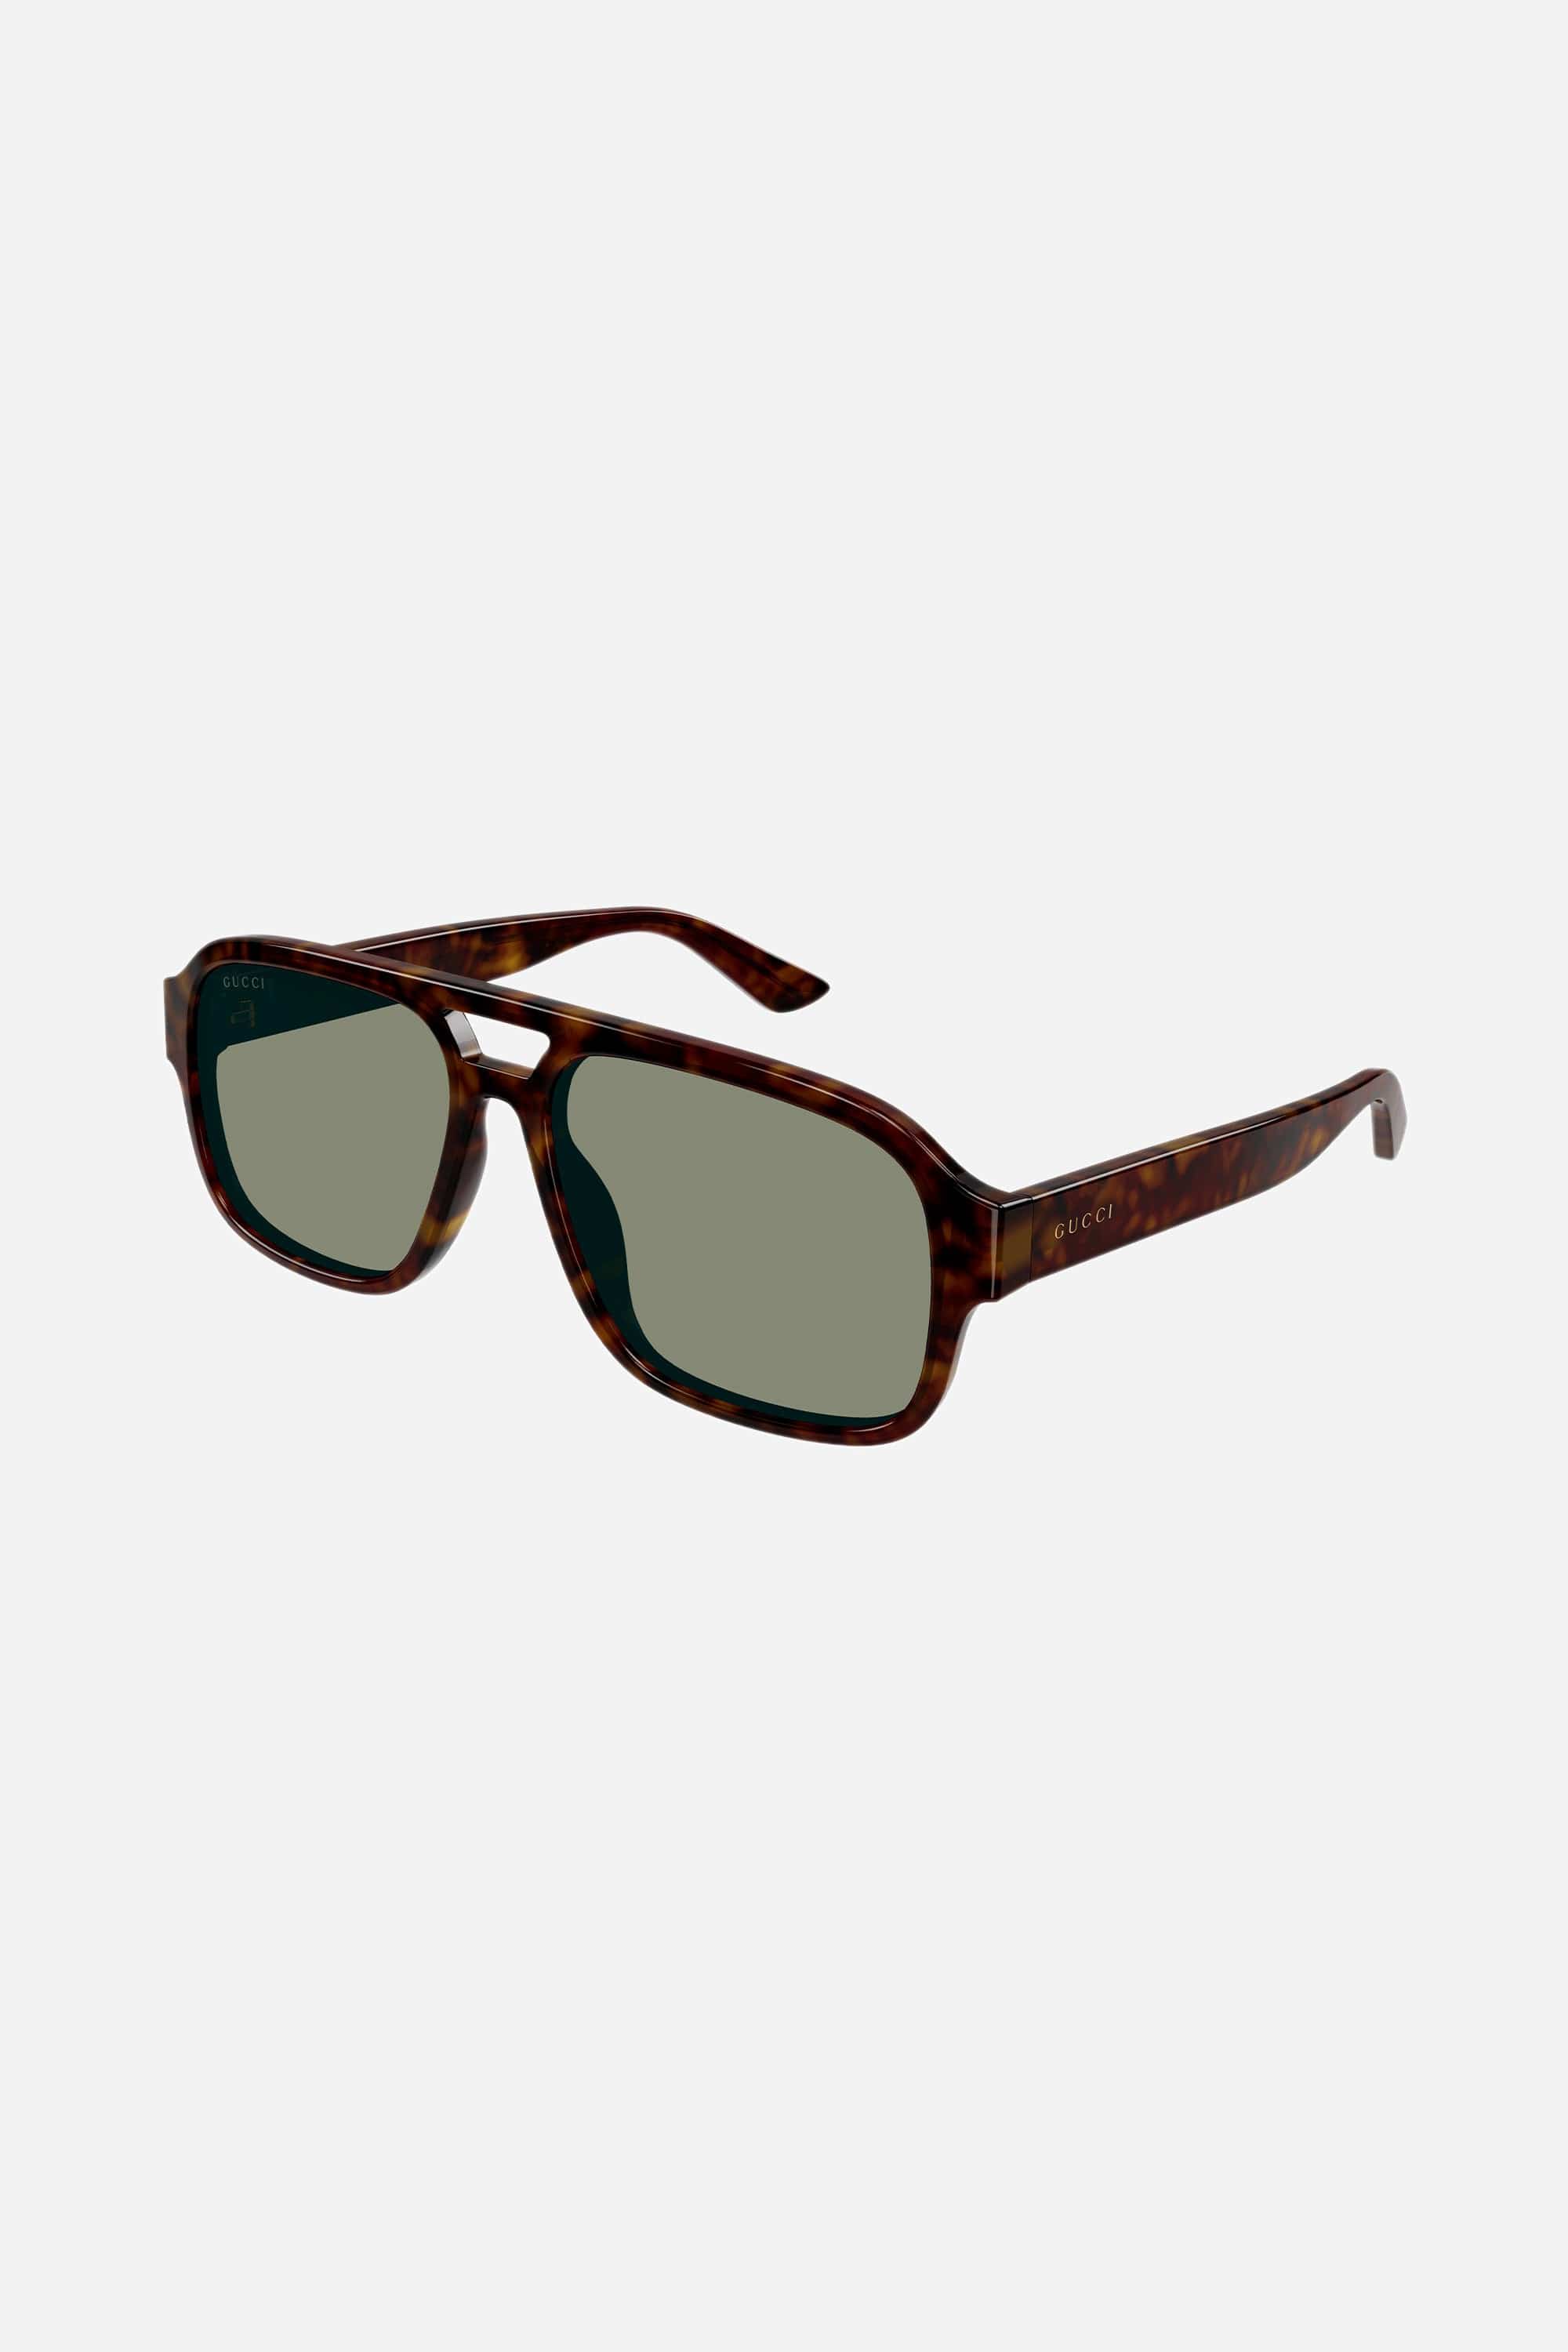 Gucci caravan dark havana sunglasses - Eyewear Club